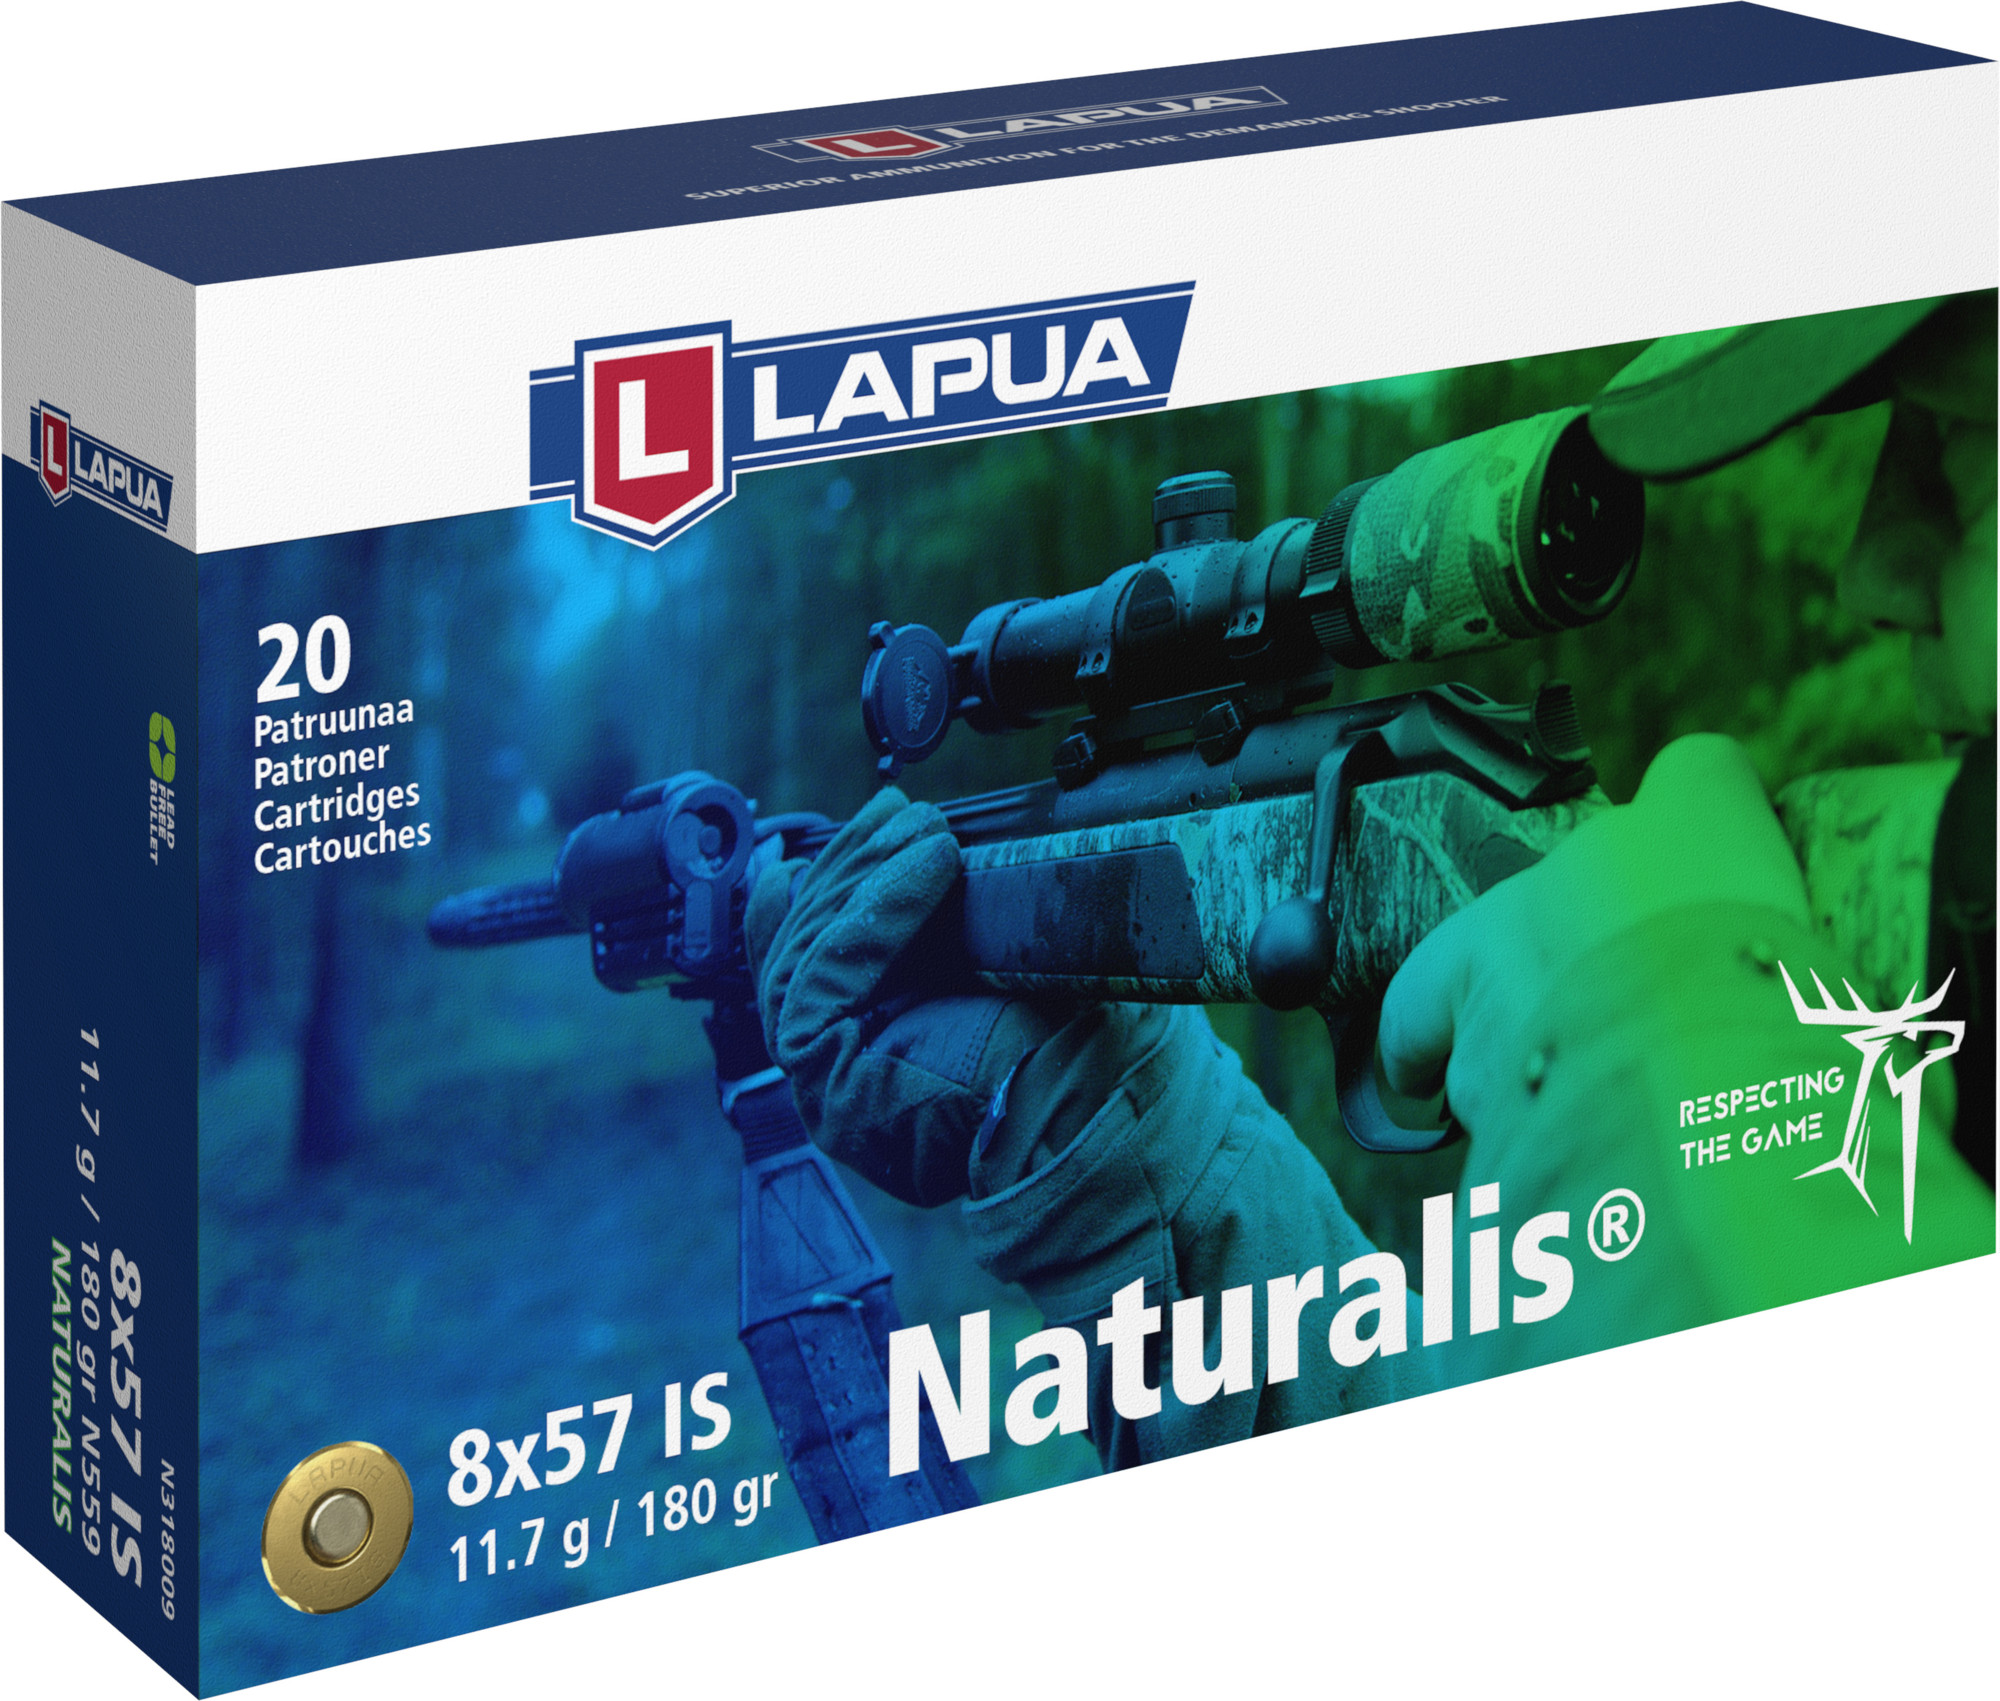 Lapua 8x57 IS 11,7g Naturalis  N559                                                                           